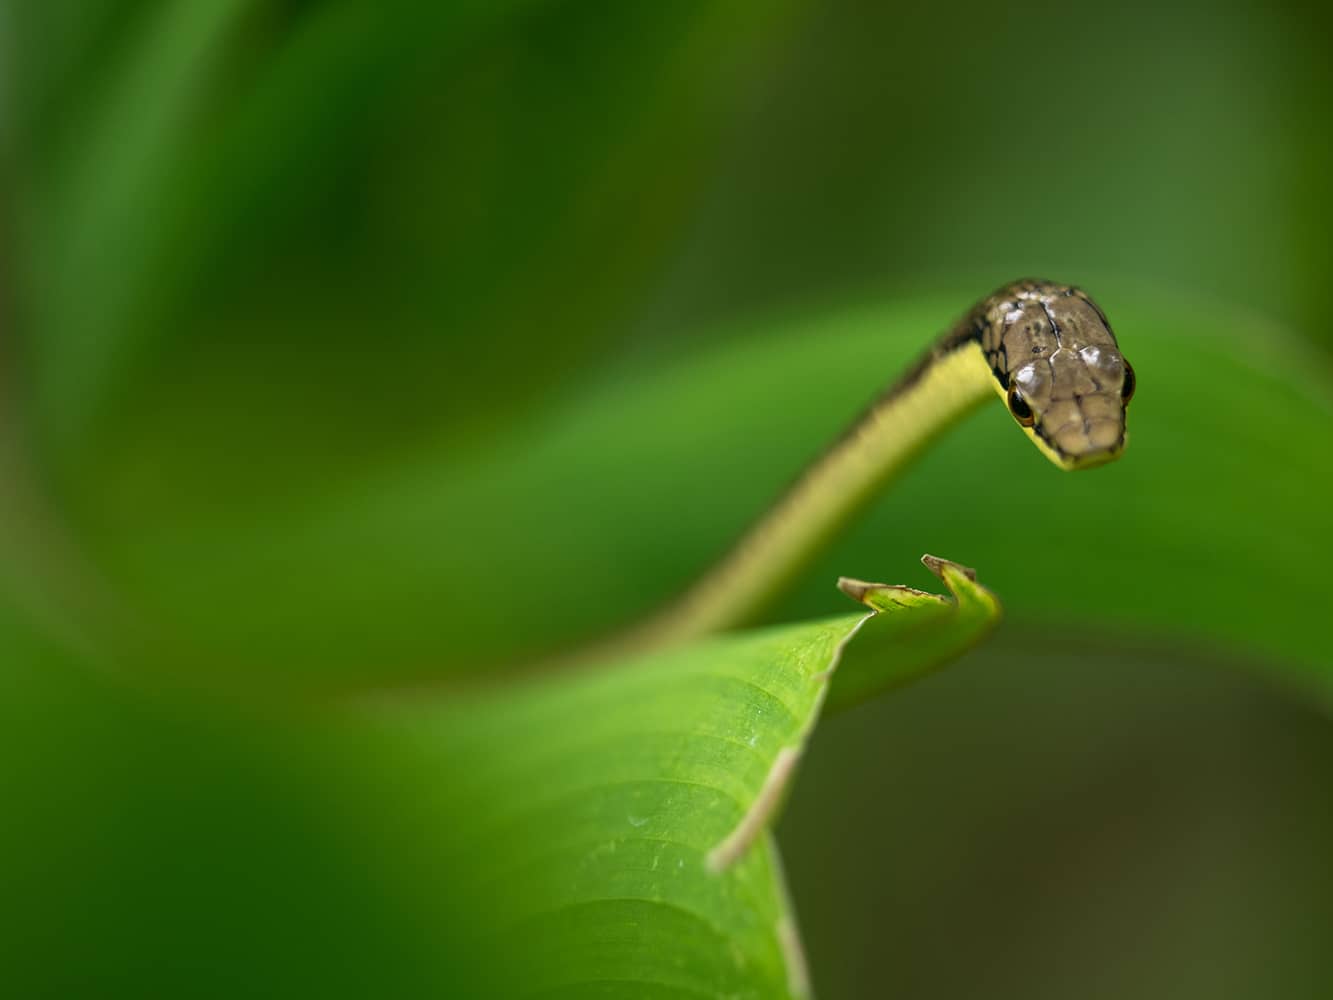 Brown tree snake on a green leaf.